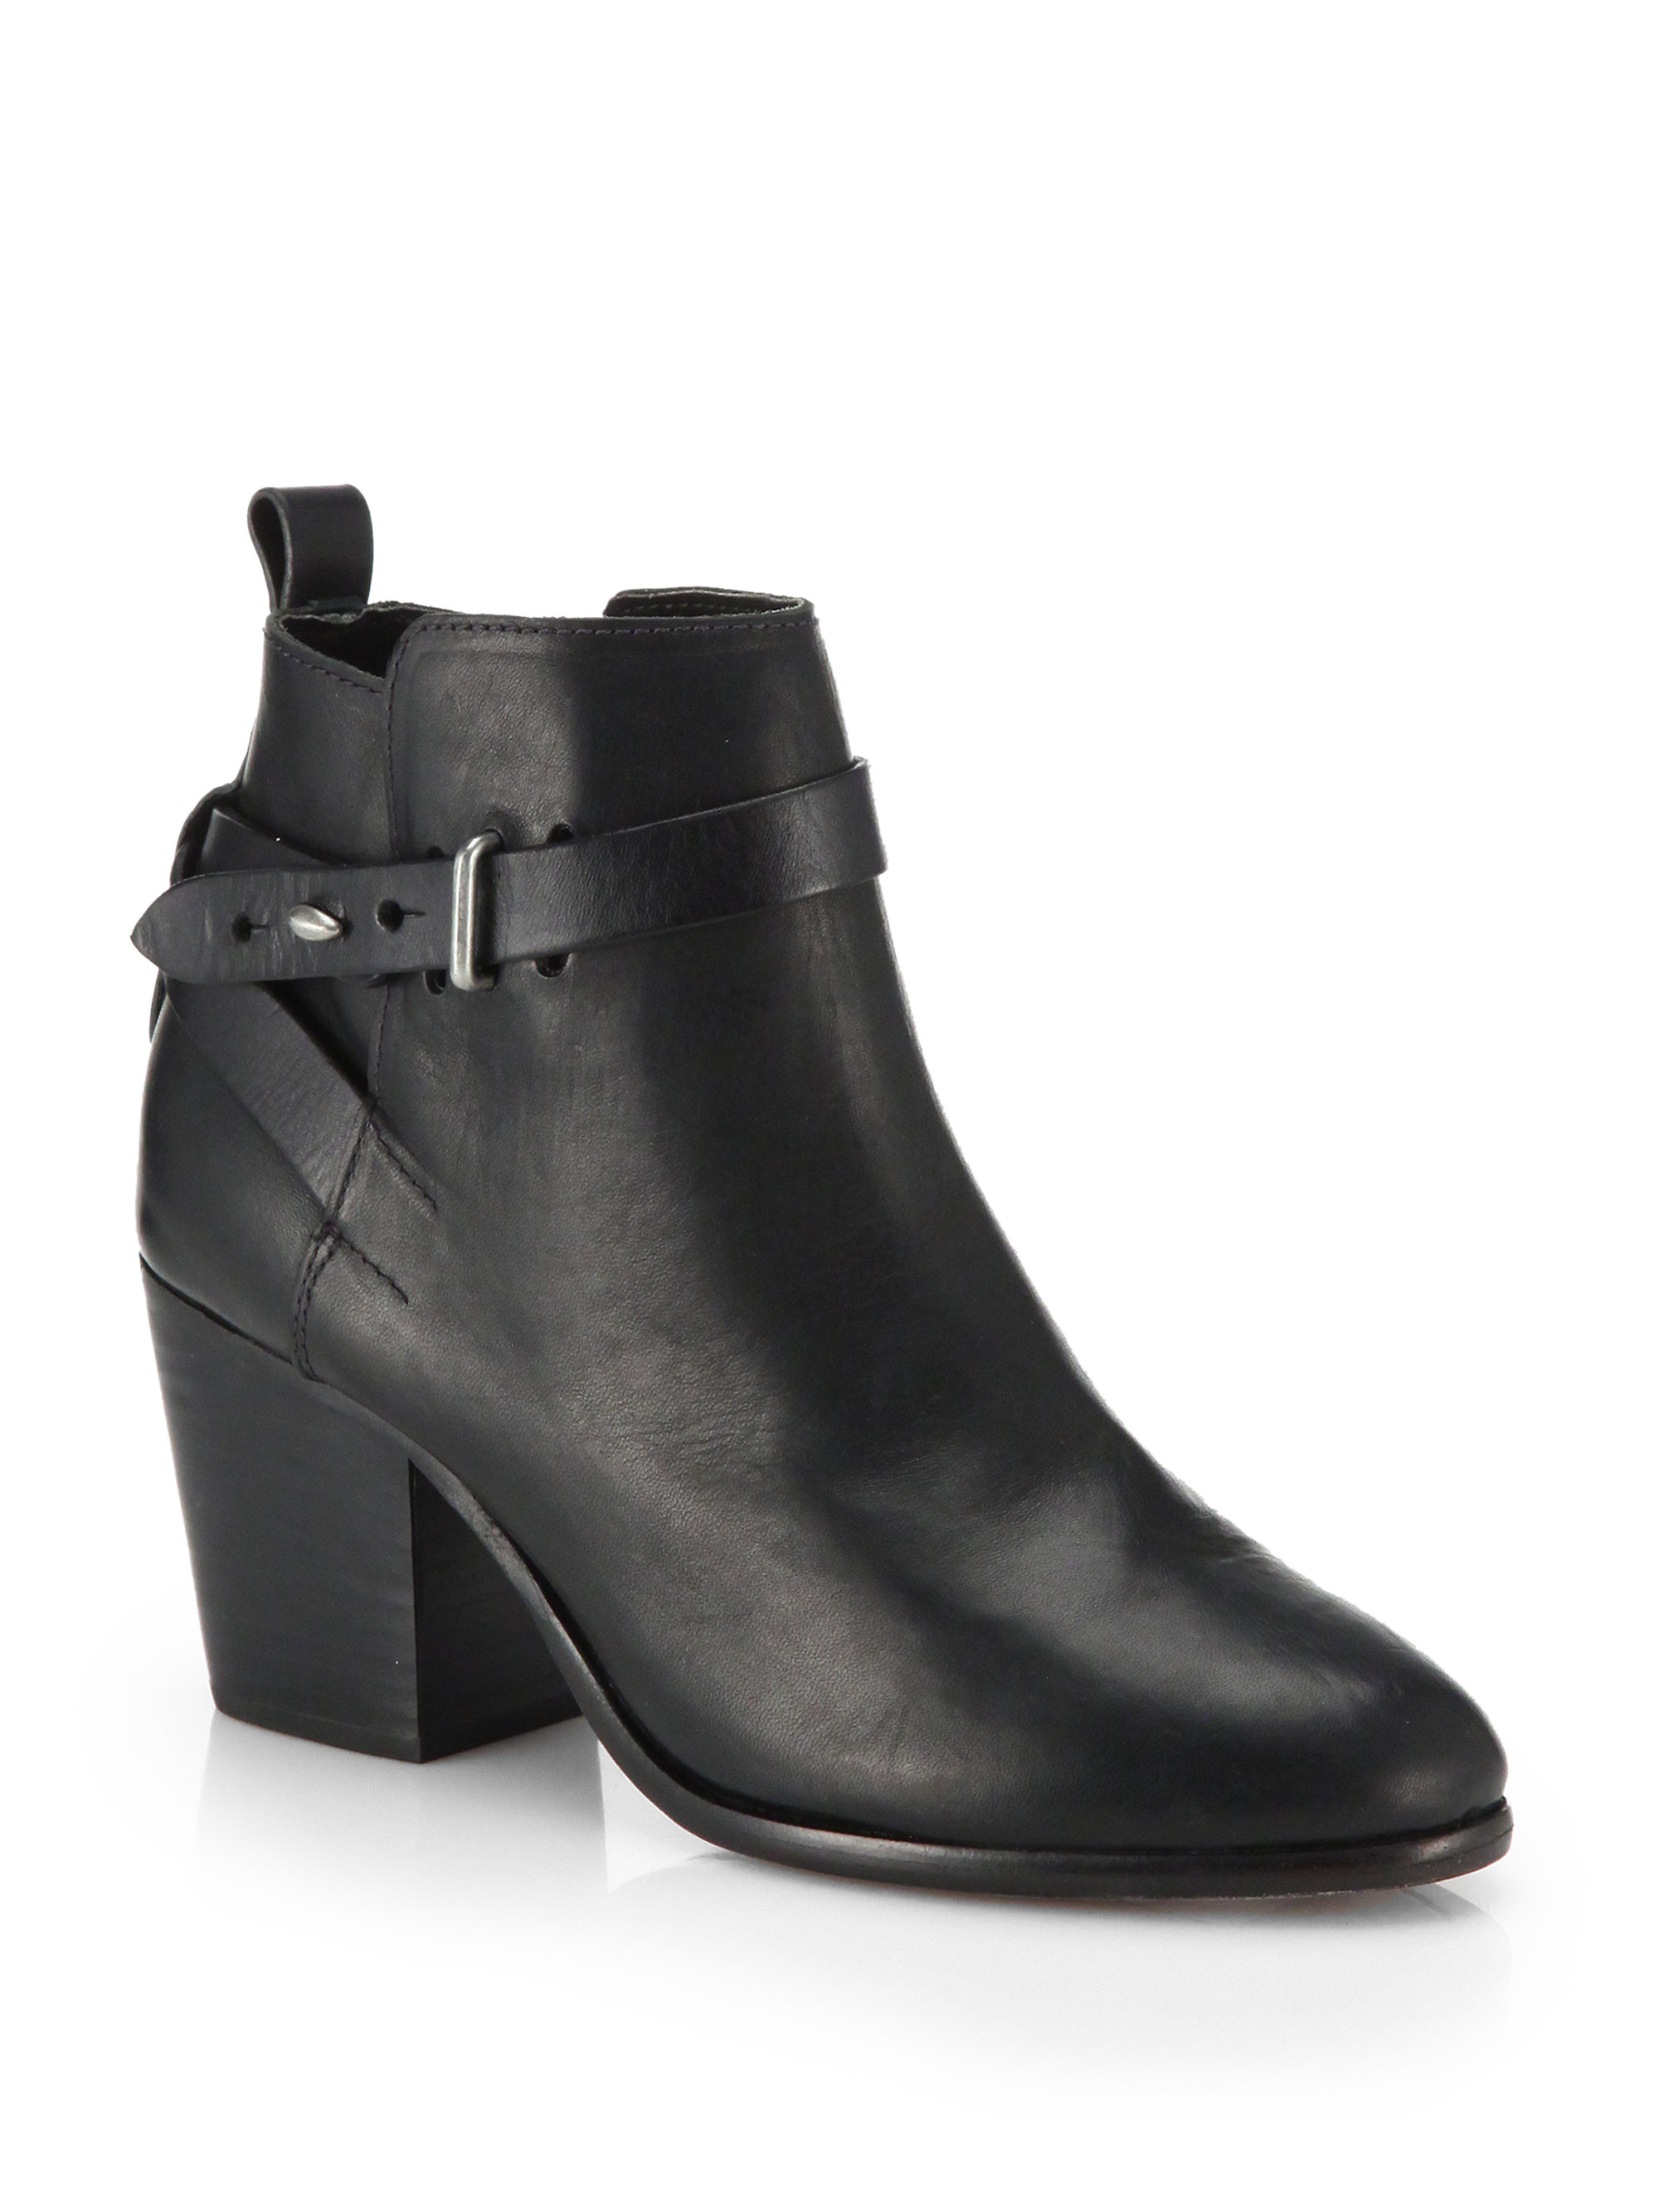 Rag & Bone Dalton Leather Ankle Boots in Black | Lyst